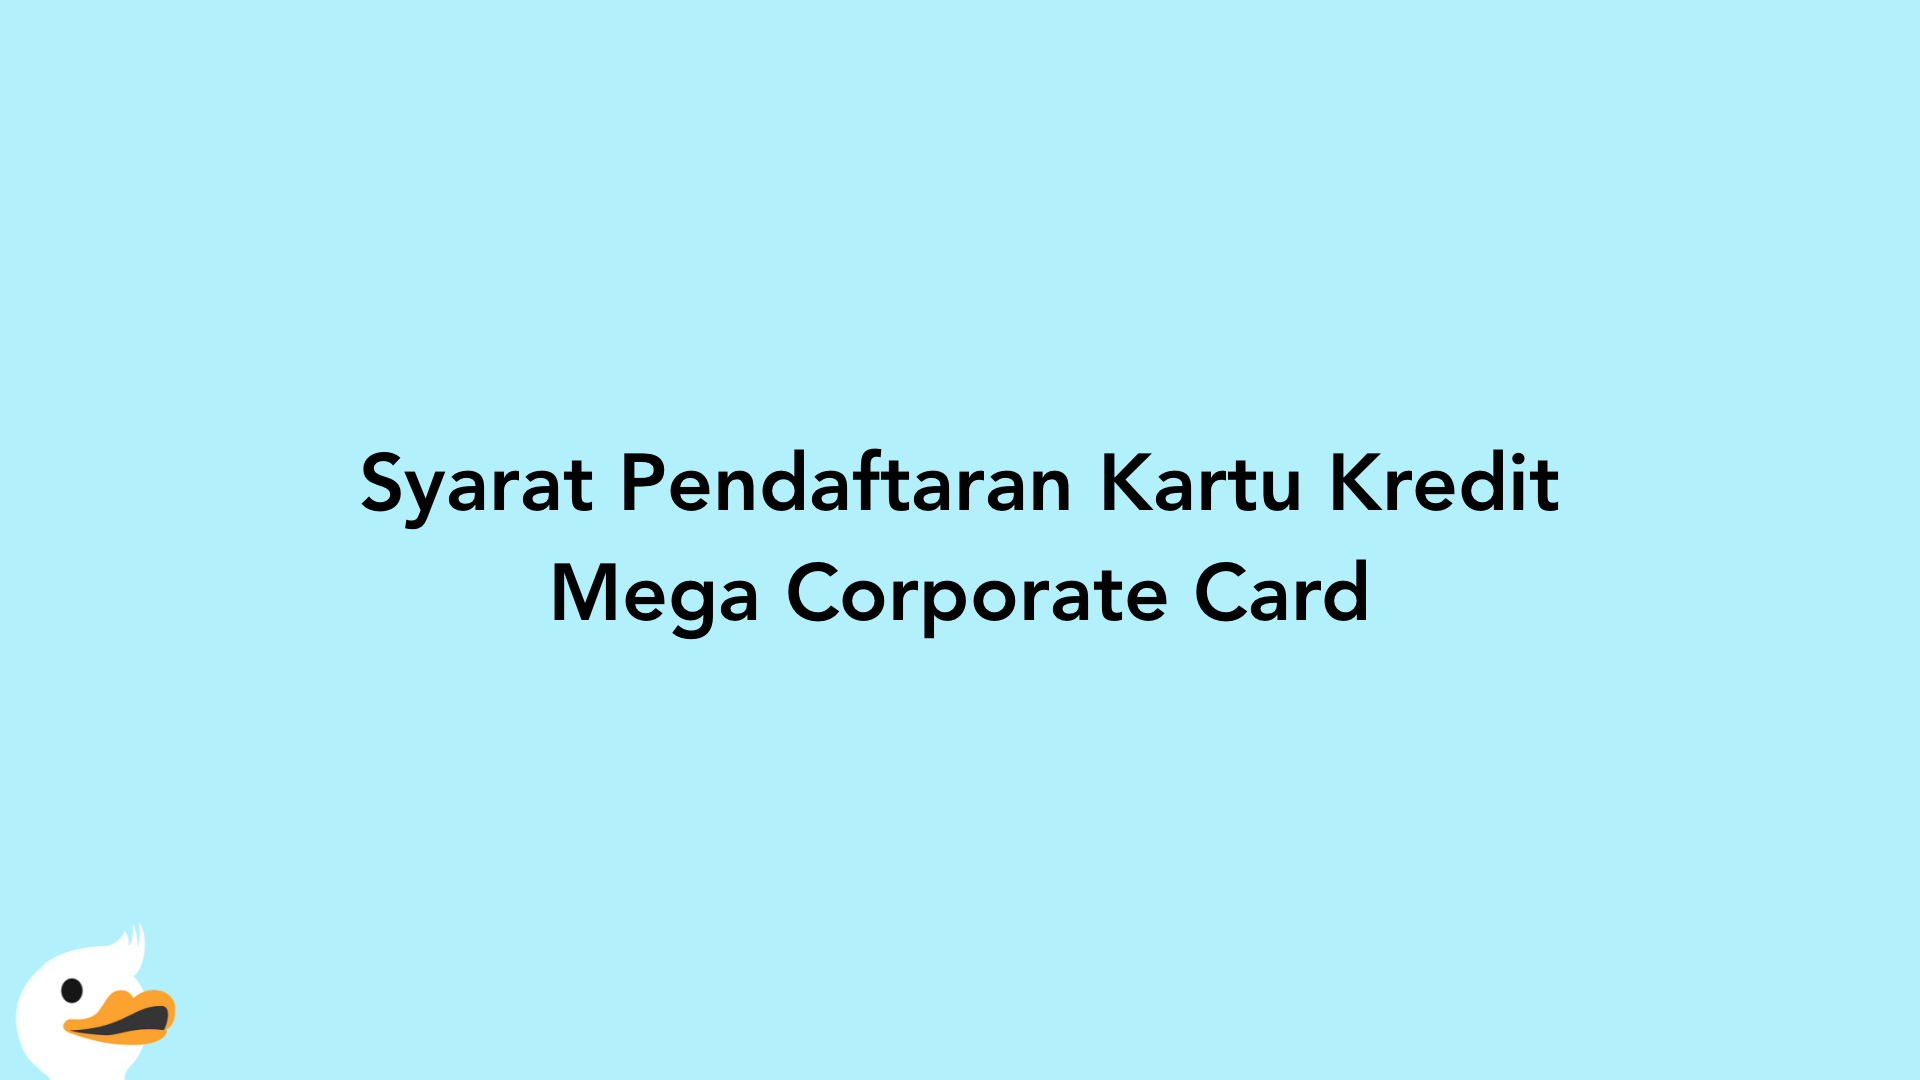 Syarat Pendaftaran Kartu Kredit Mega Corporate Card